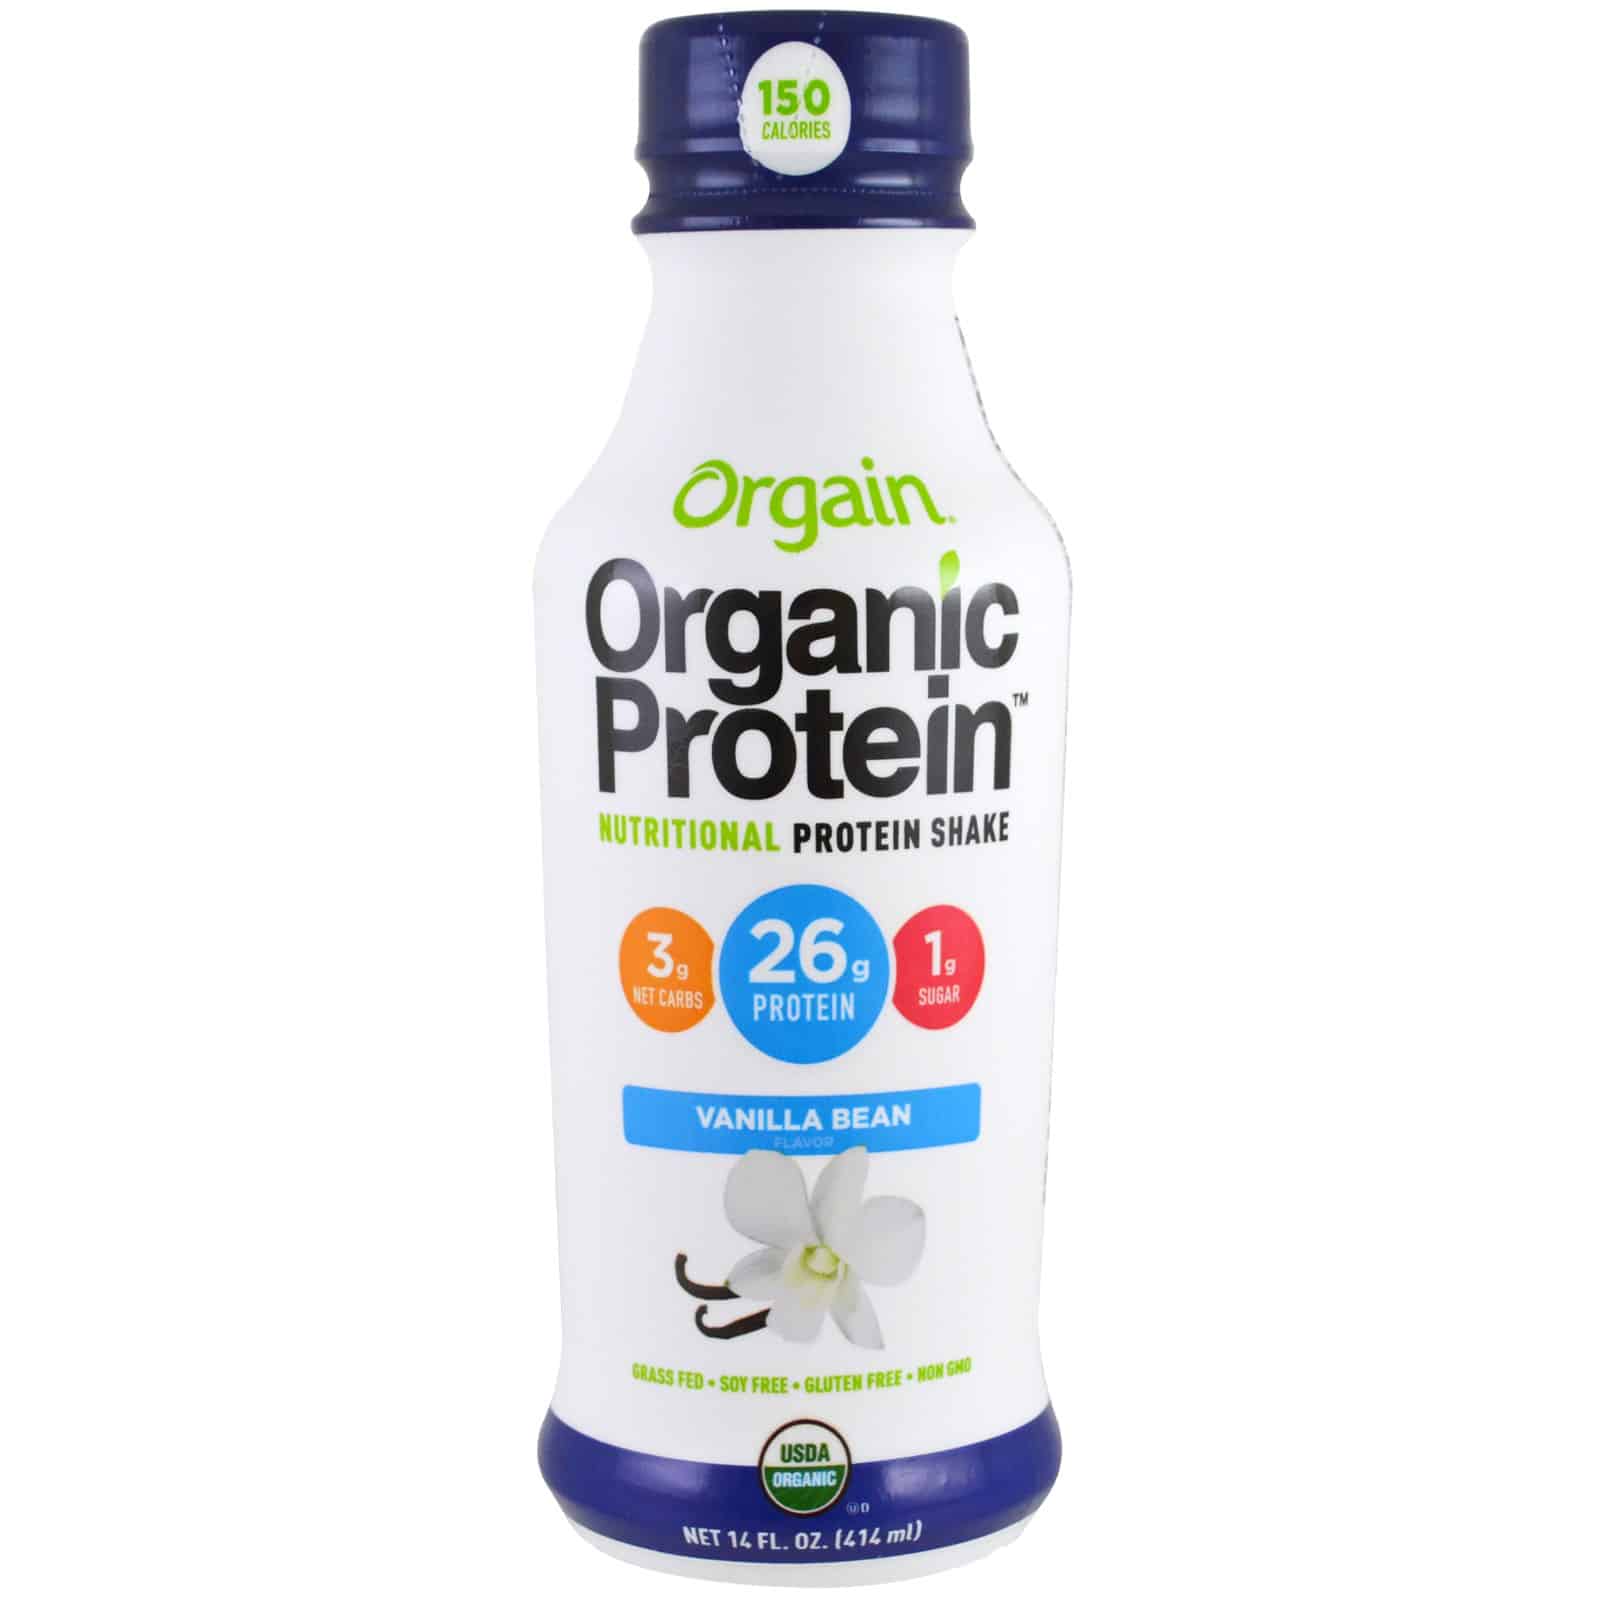 Orgain, Organic Protein Nutritional Protein Shake, Vanilla Bean Flavor ...